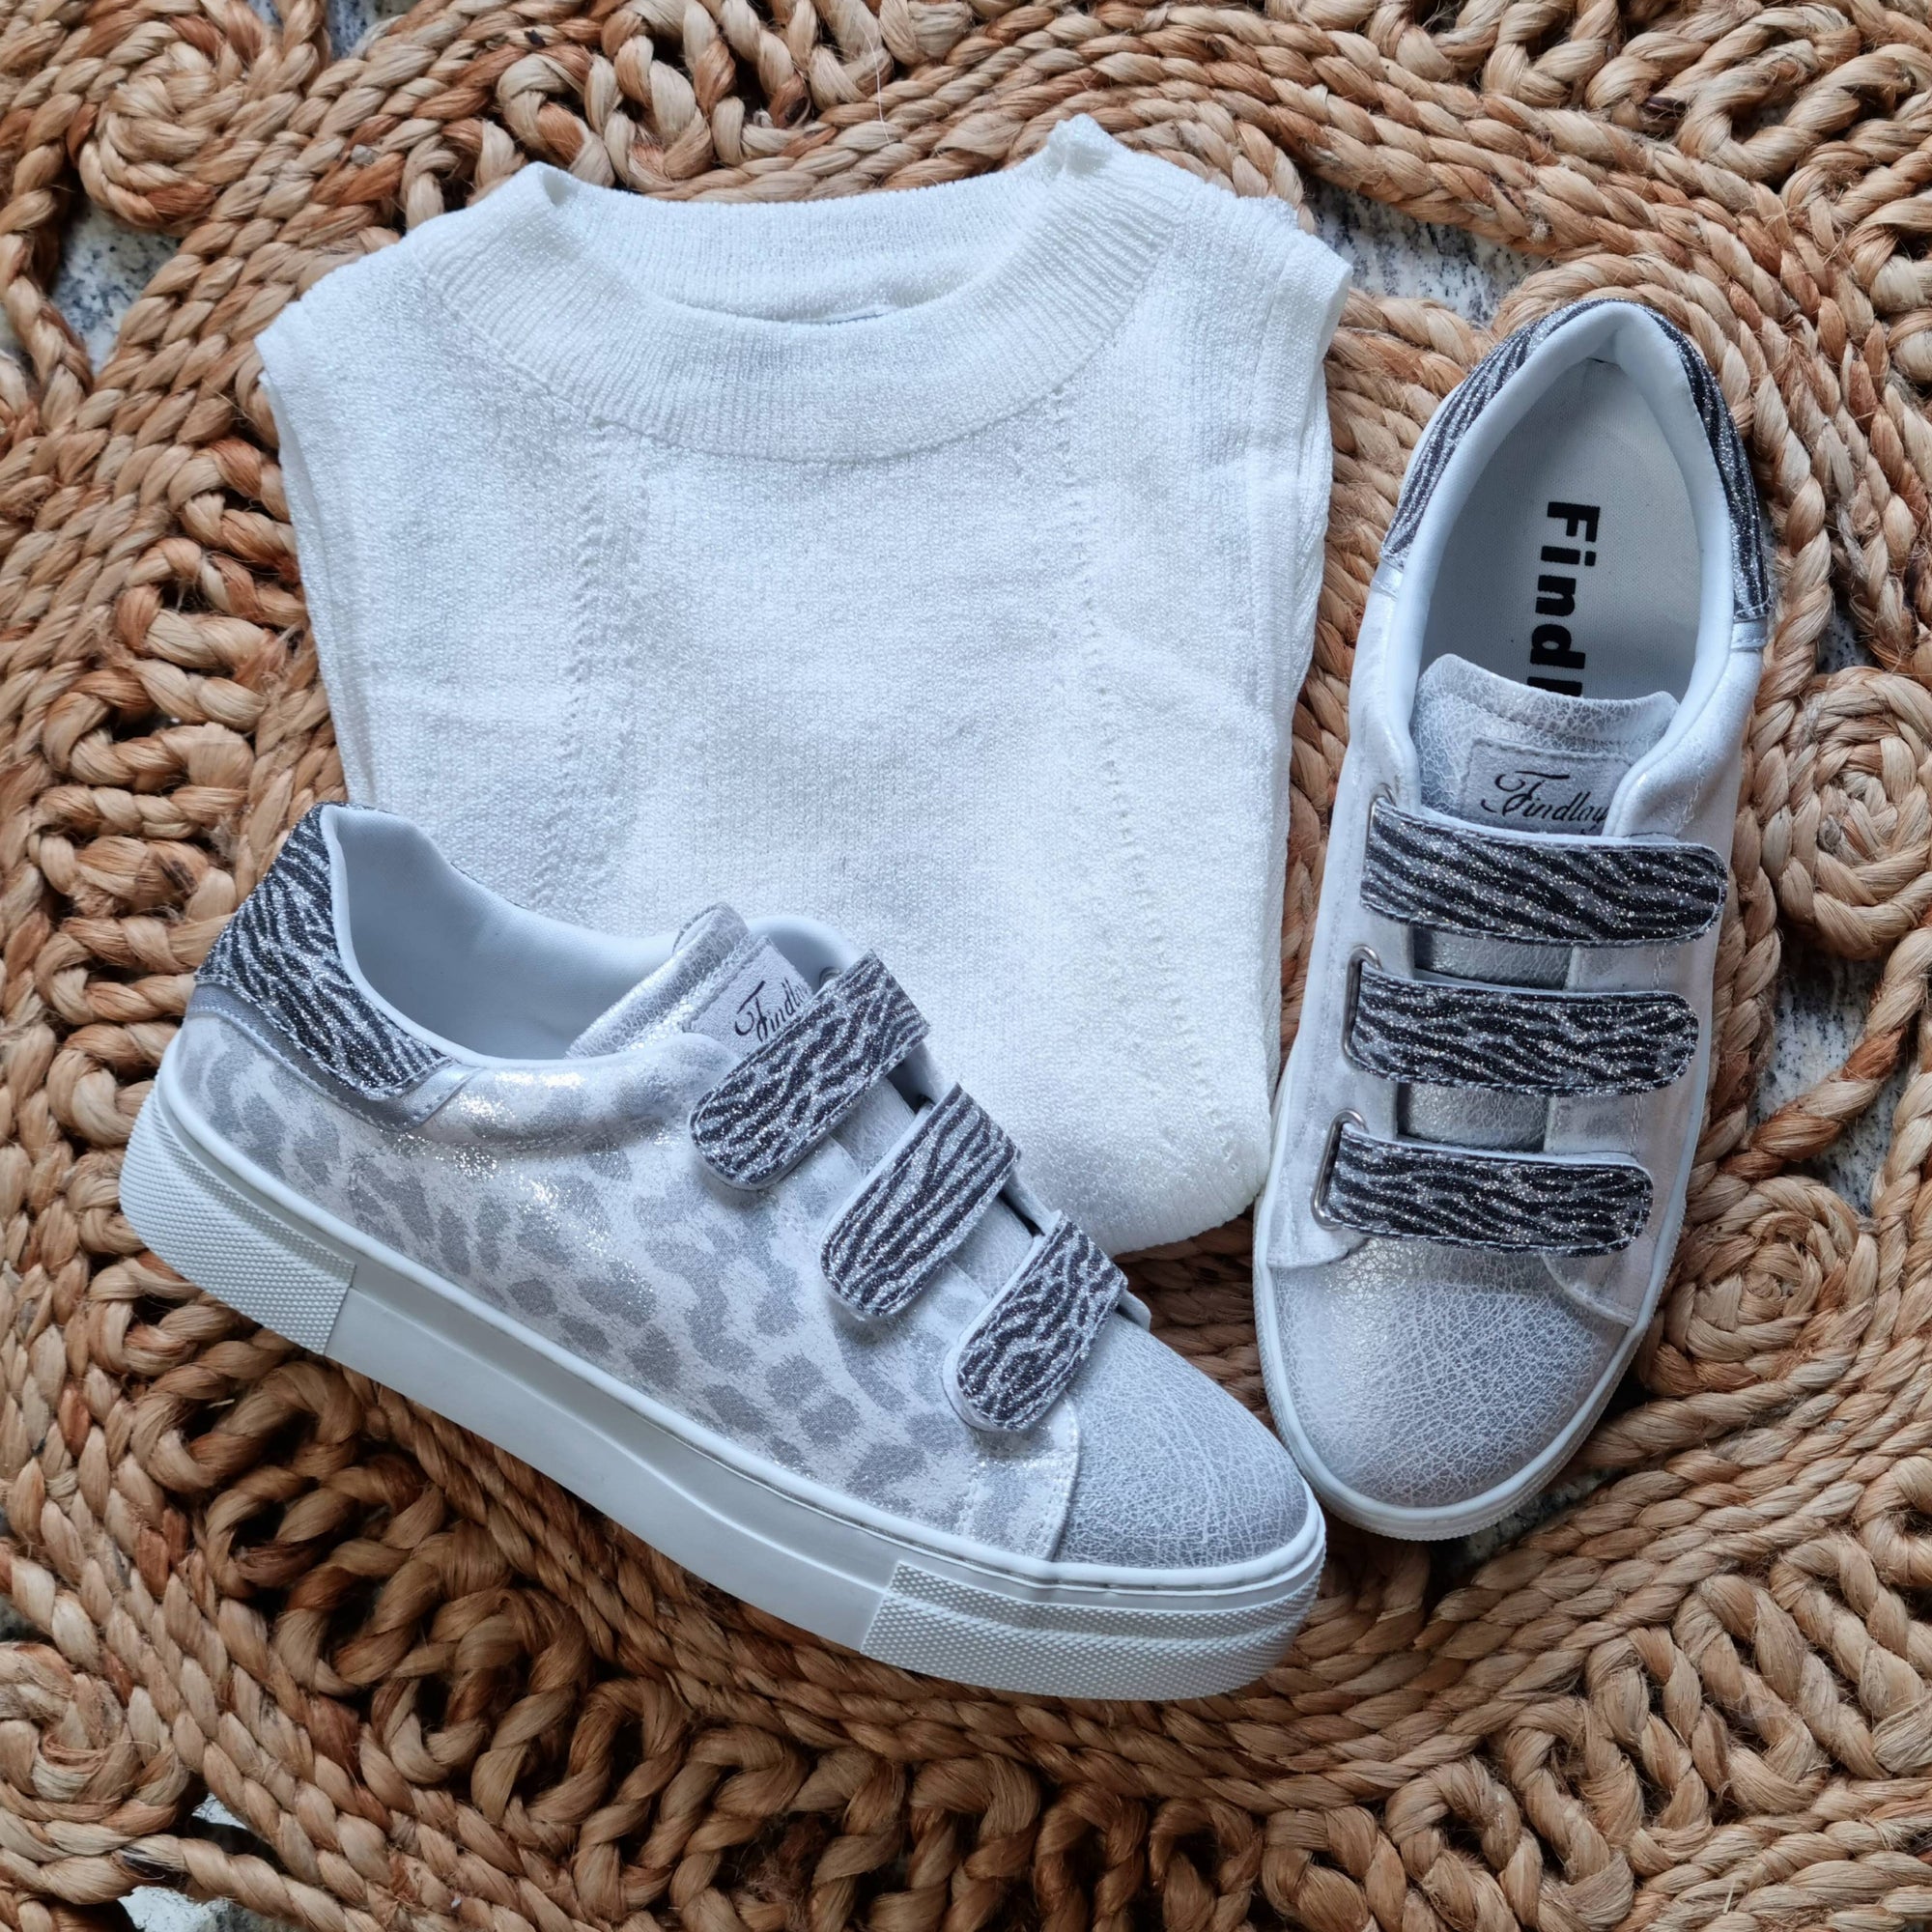 Silver zebra sneakers